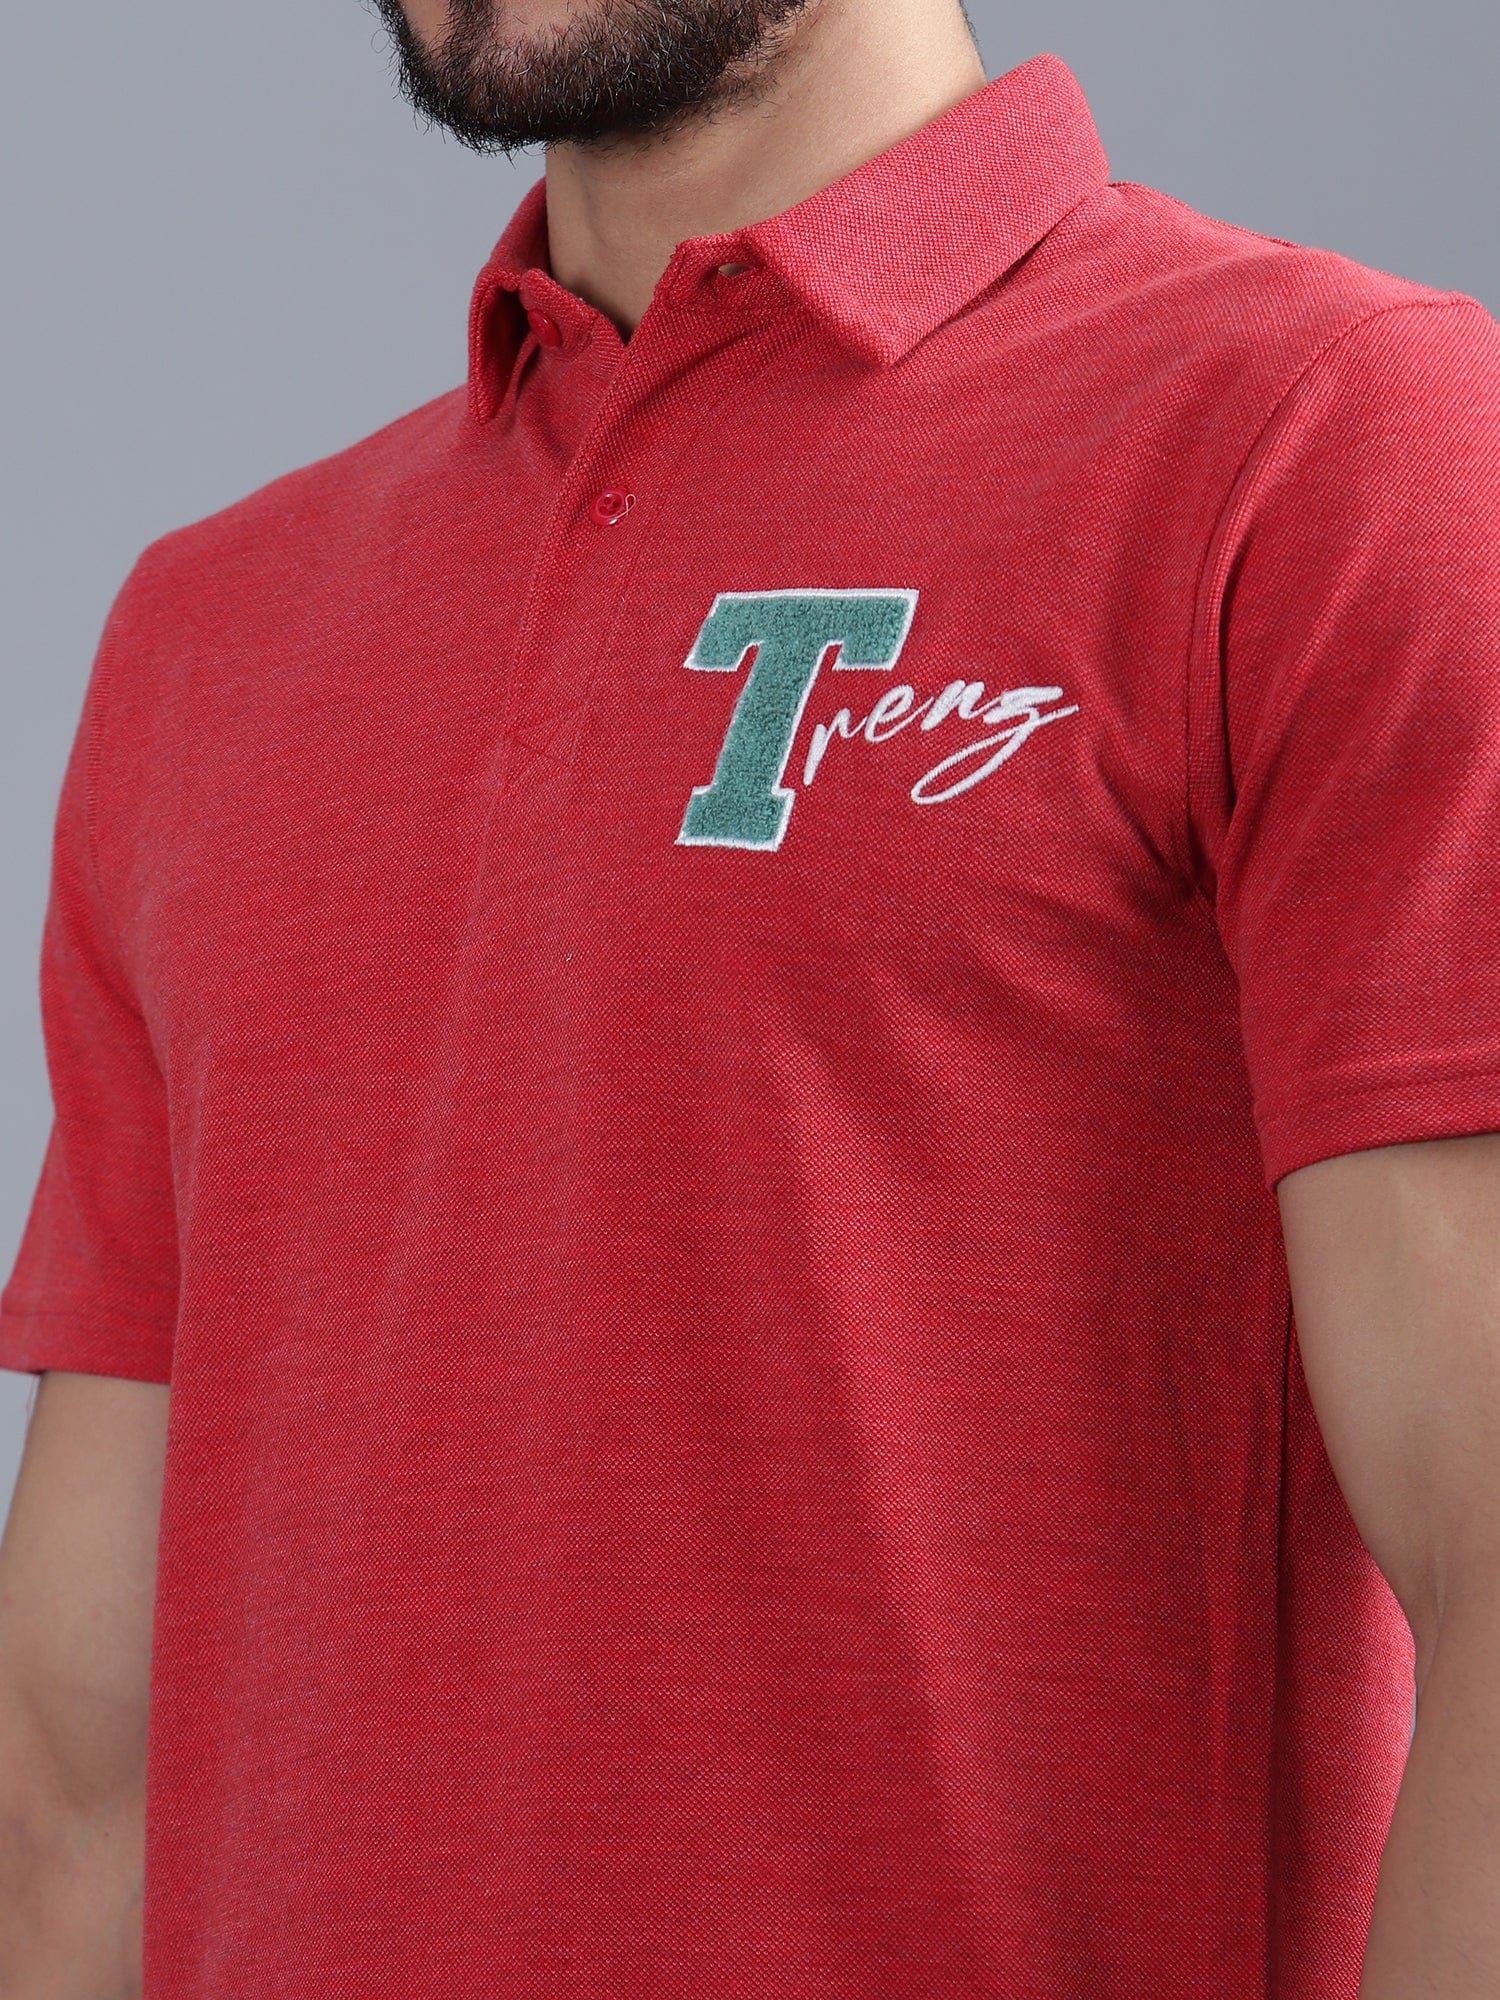 Brandlove Polo T-Shirt Tango Red - trenz